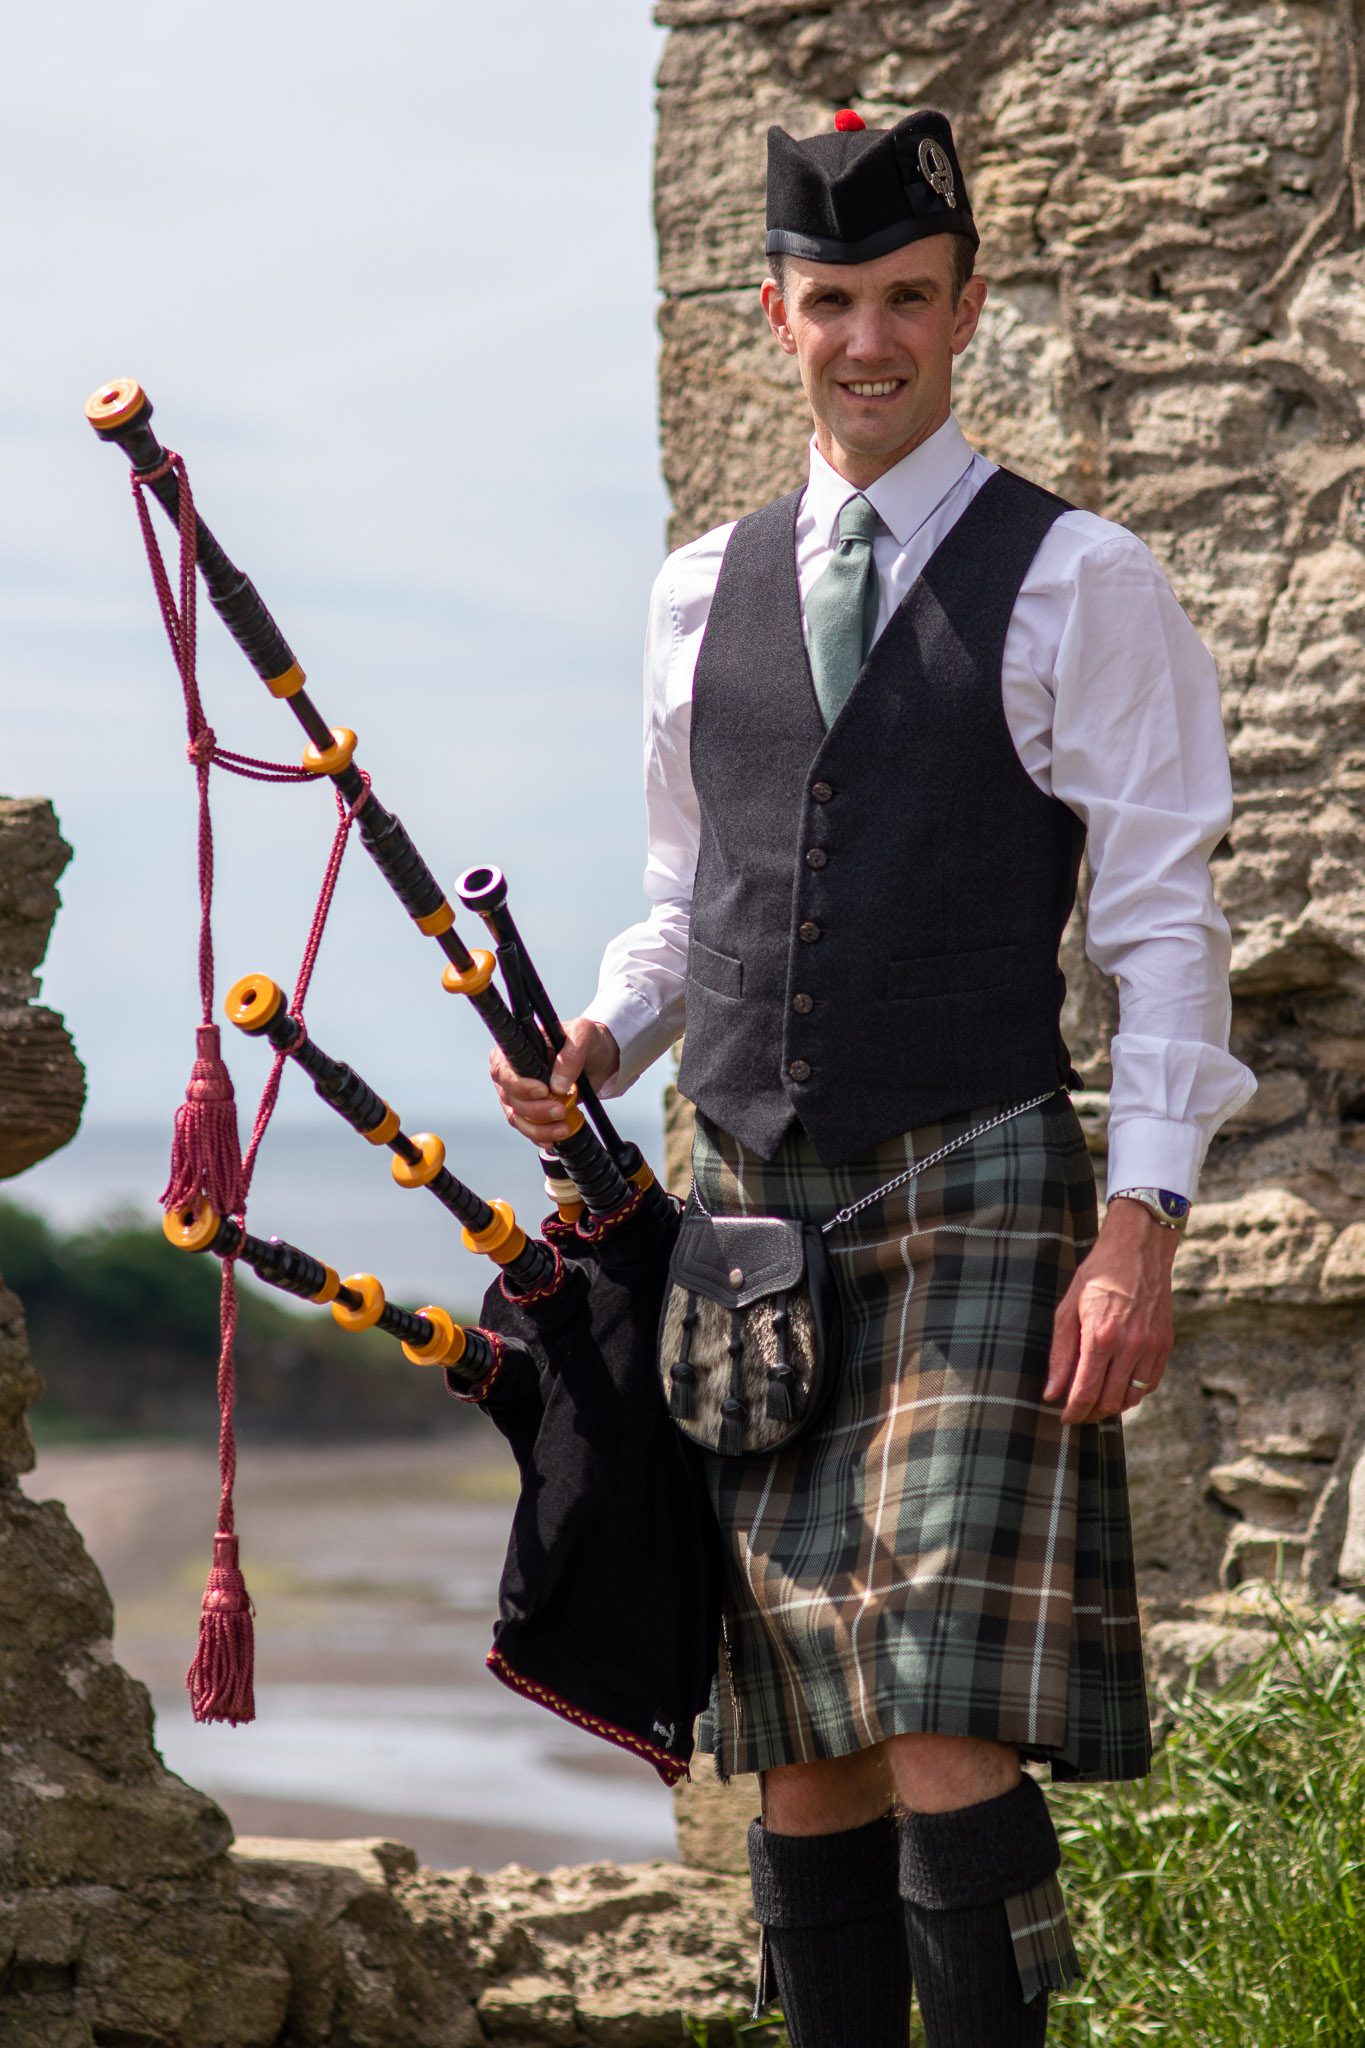 Alistair Brown Ayrshire Piper playing bagpipes and wearing lamont kilt at Greenan Shore in Ayr, Scotland (52 of 74)